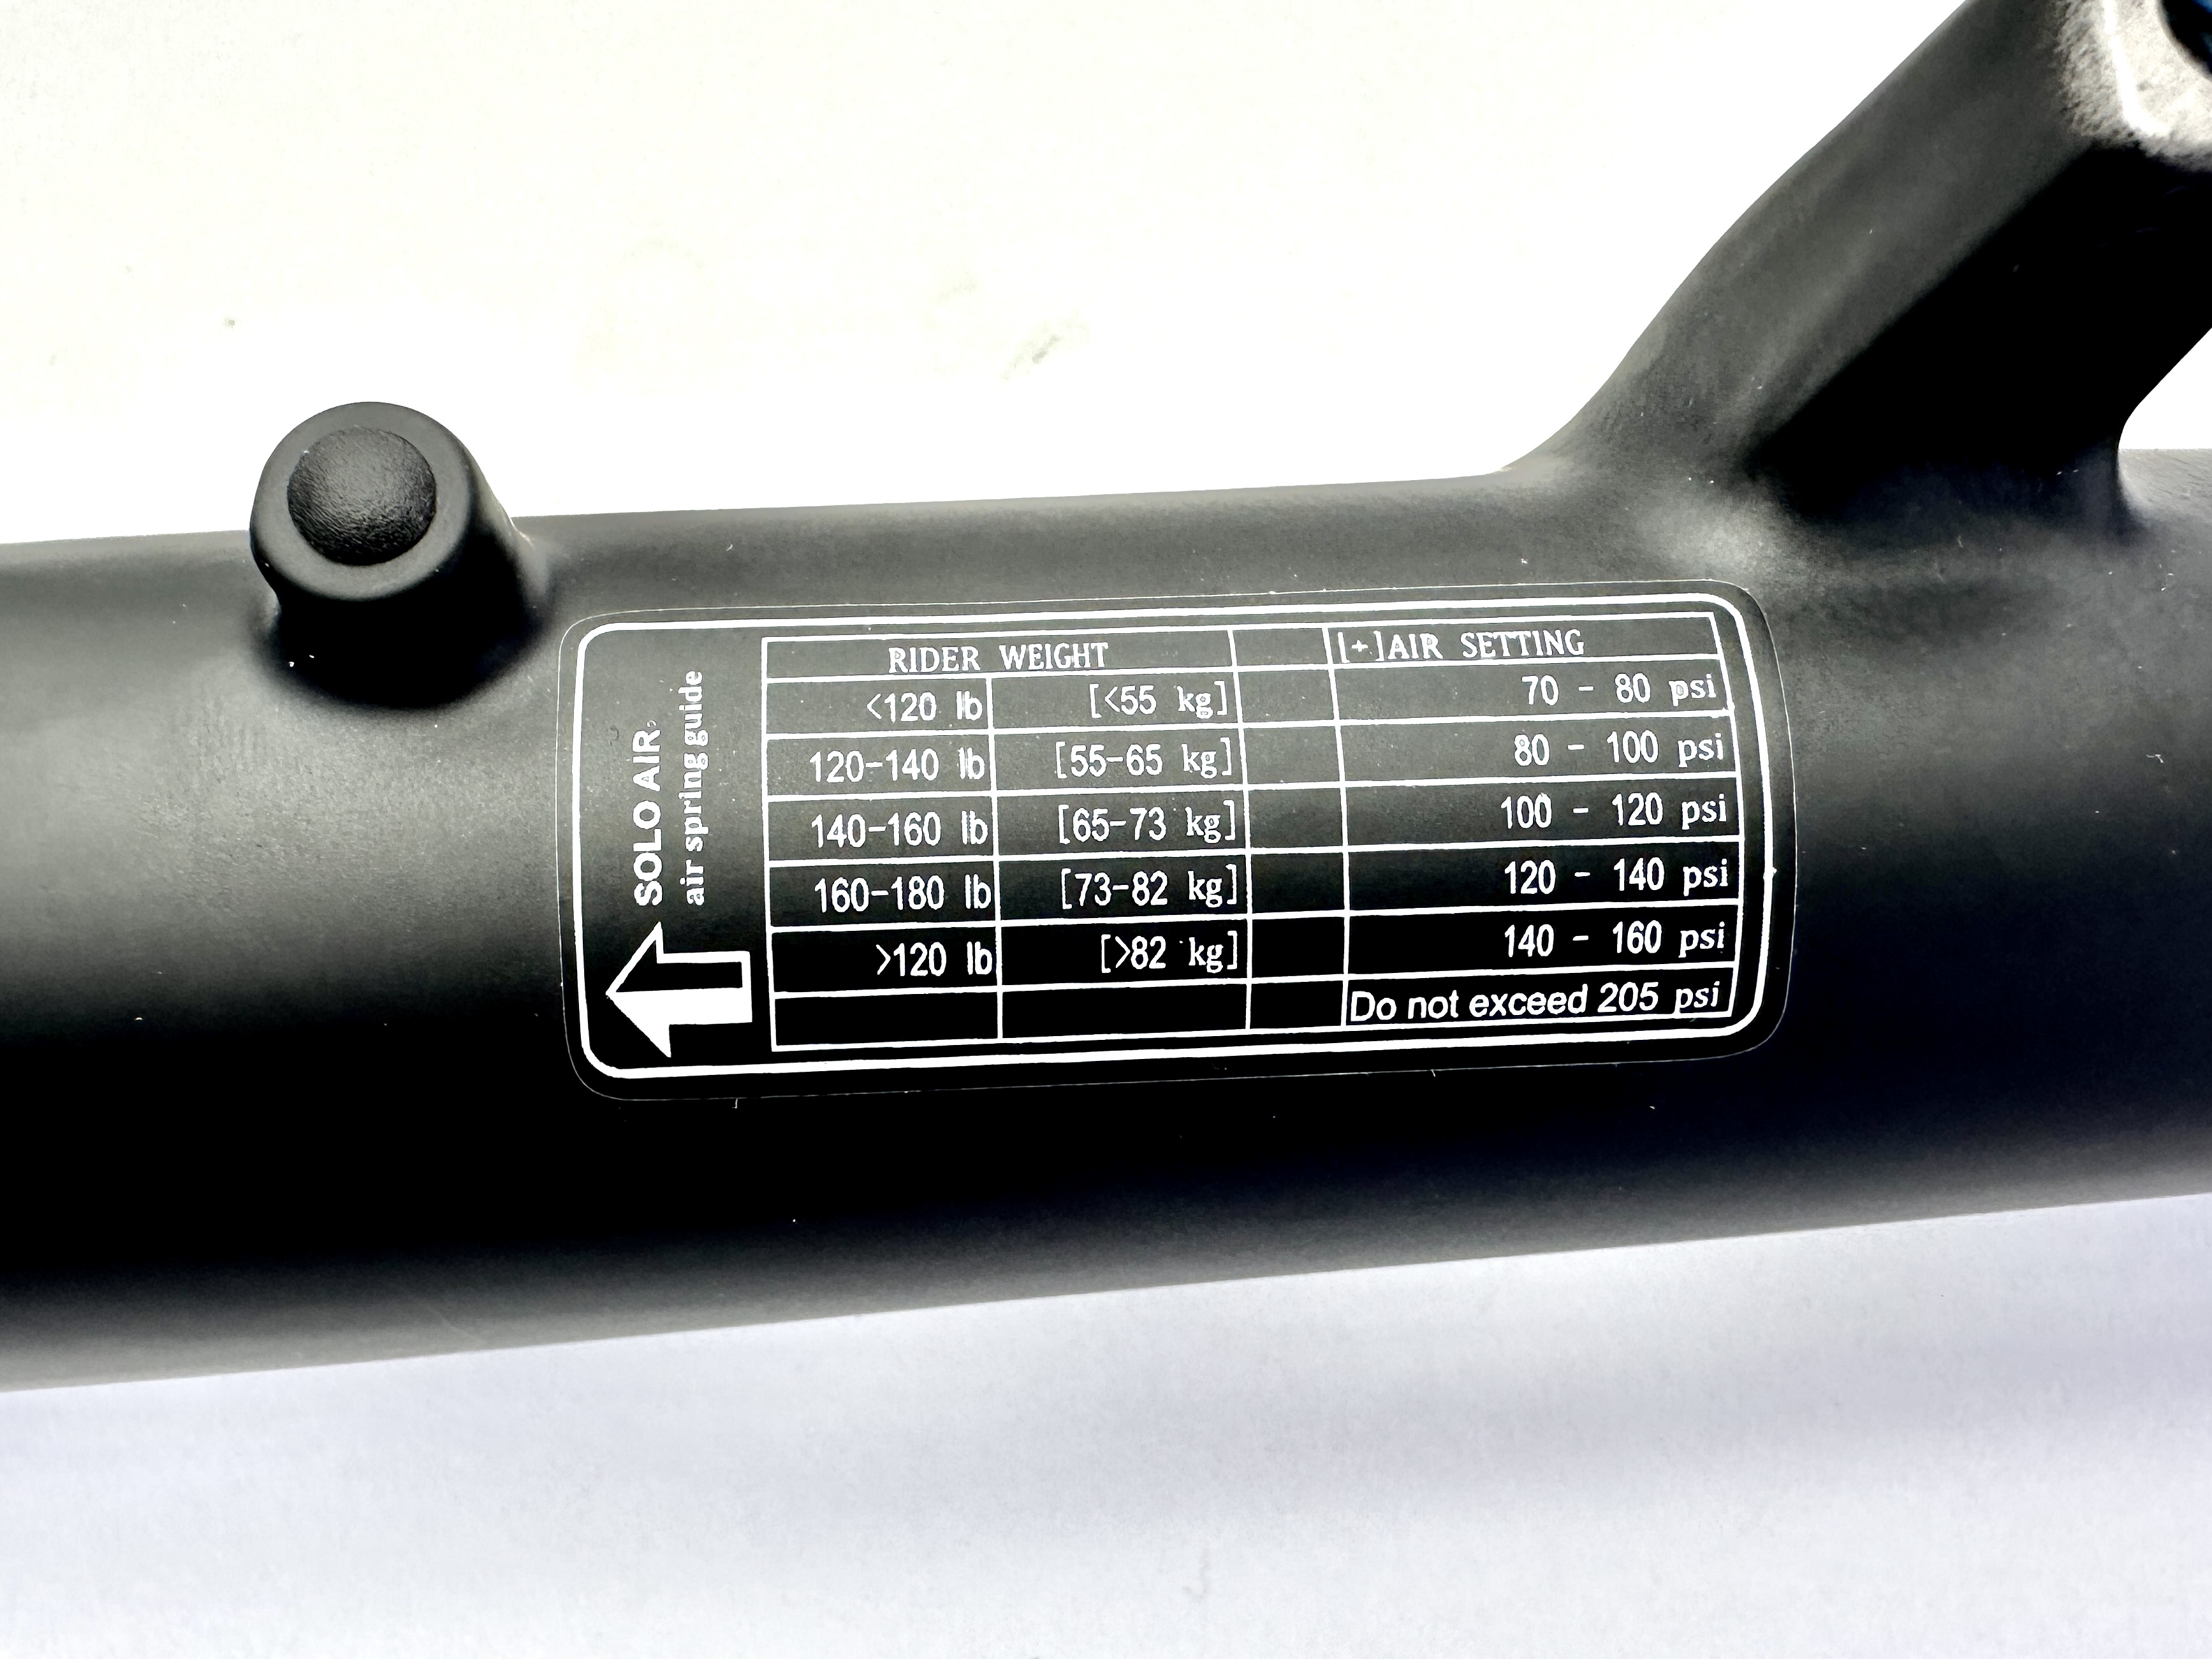 UD 204 Suspension fork for fatbike air suspension, matt black